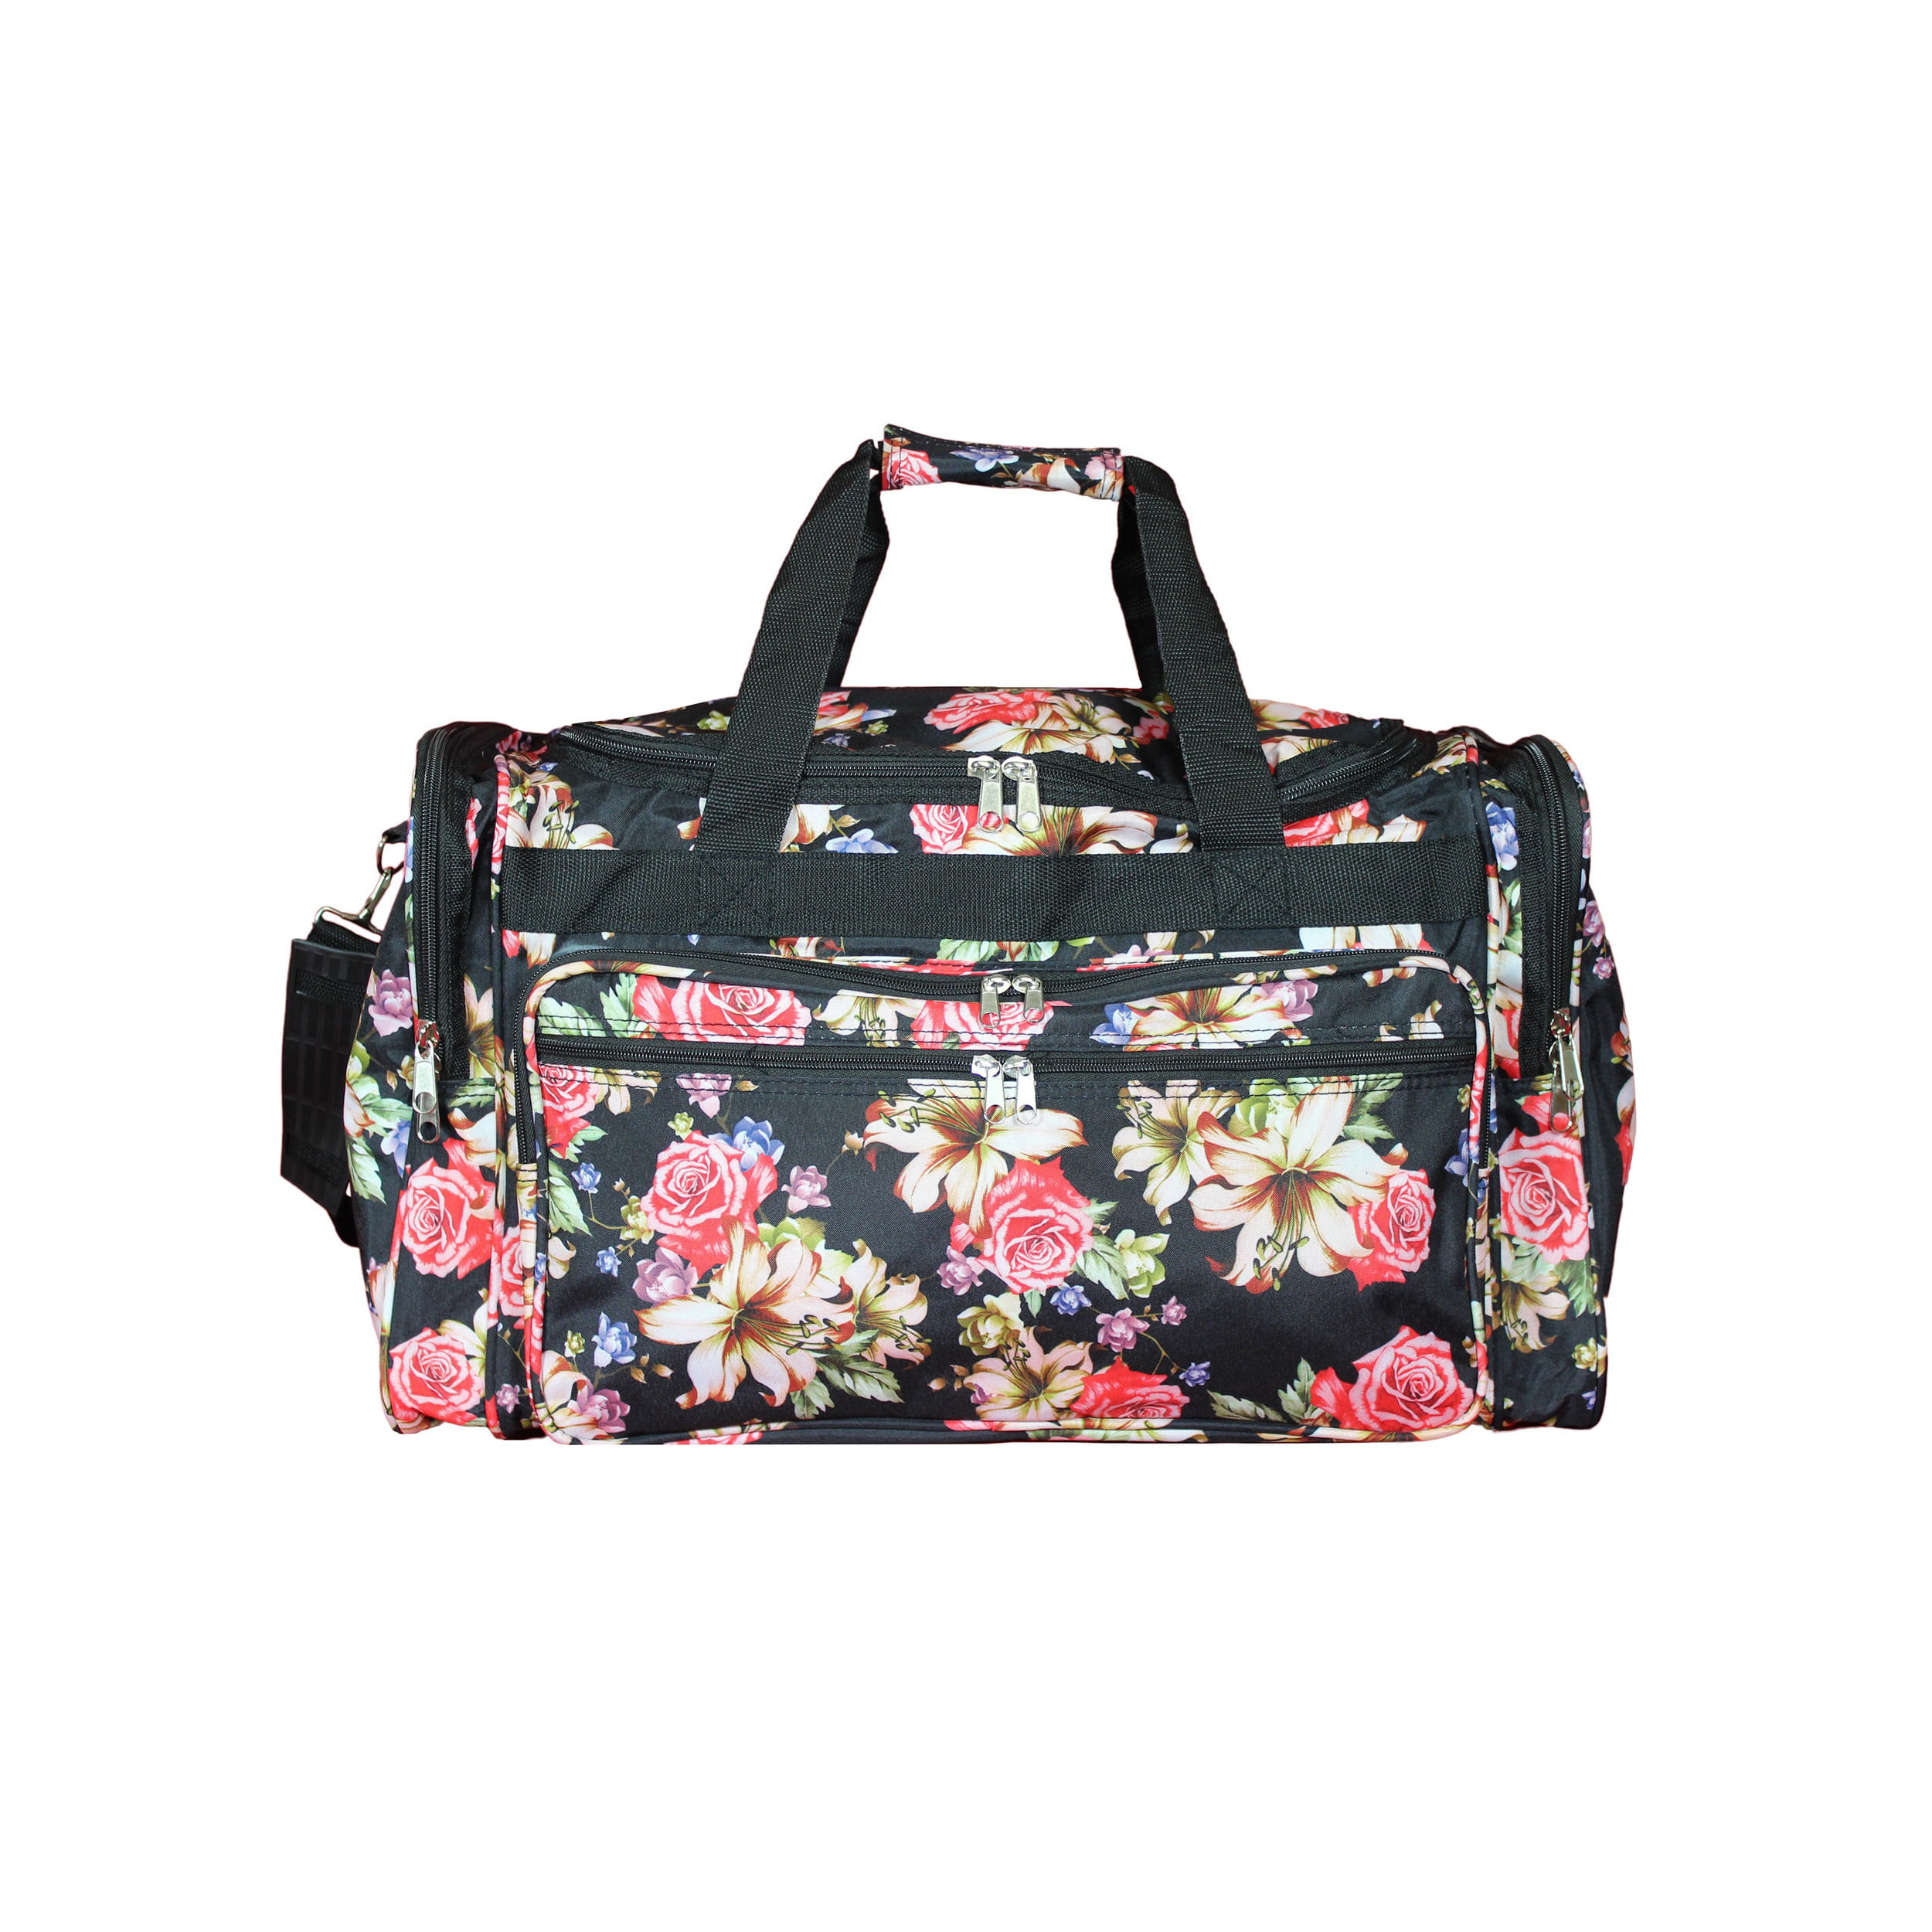 World Traveler 16-inch Carry-On Duffel Bag - Rose Lily - Walmart.com ...